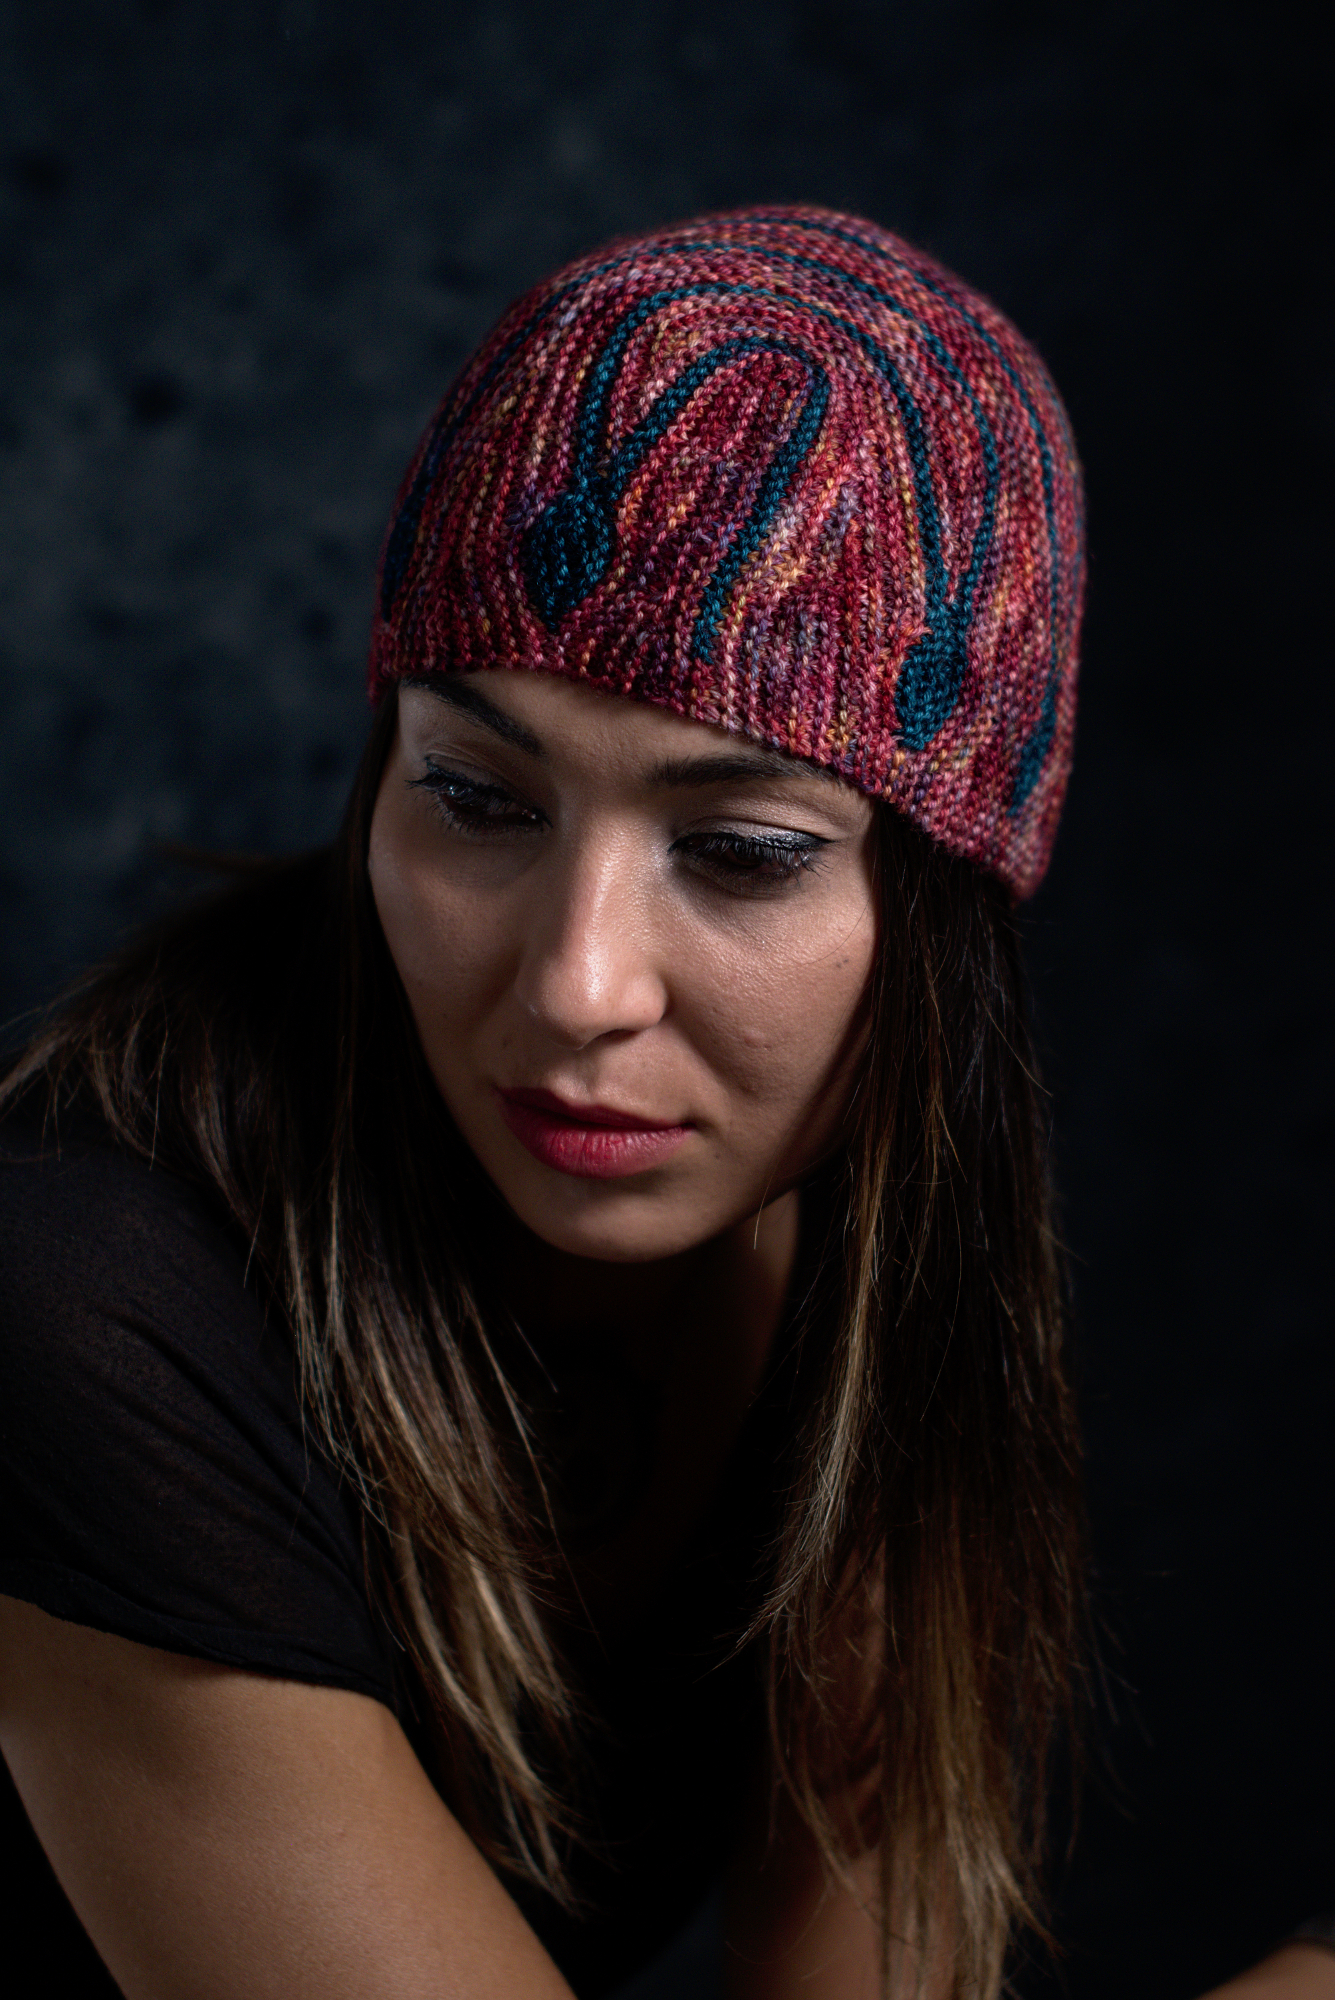 Oscillare sideways knit short row colourwork hat knitting pattern